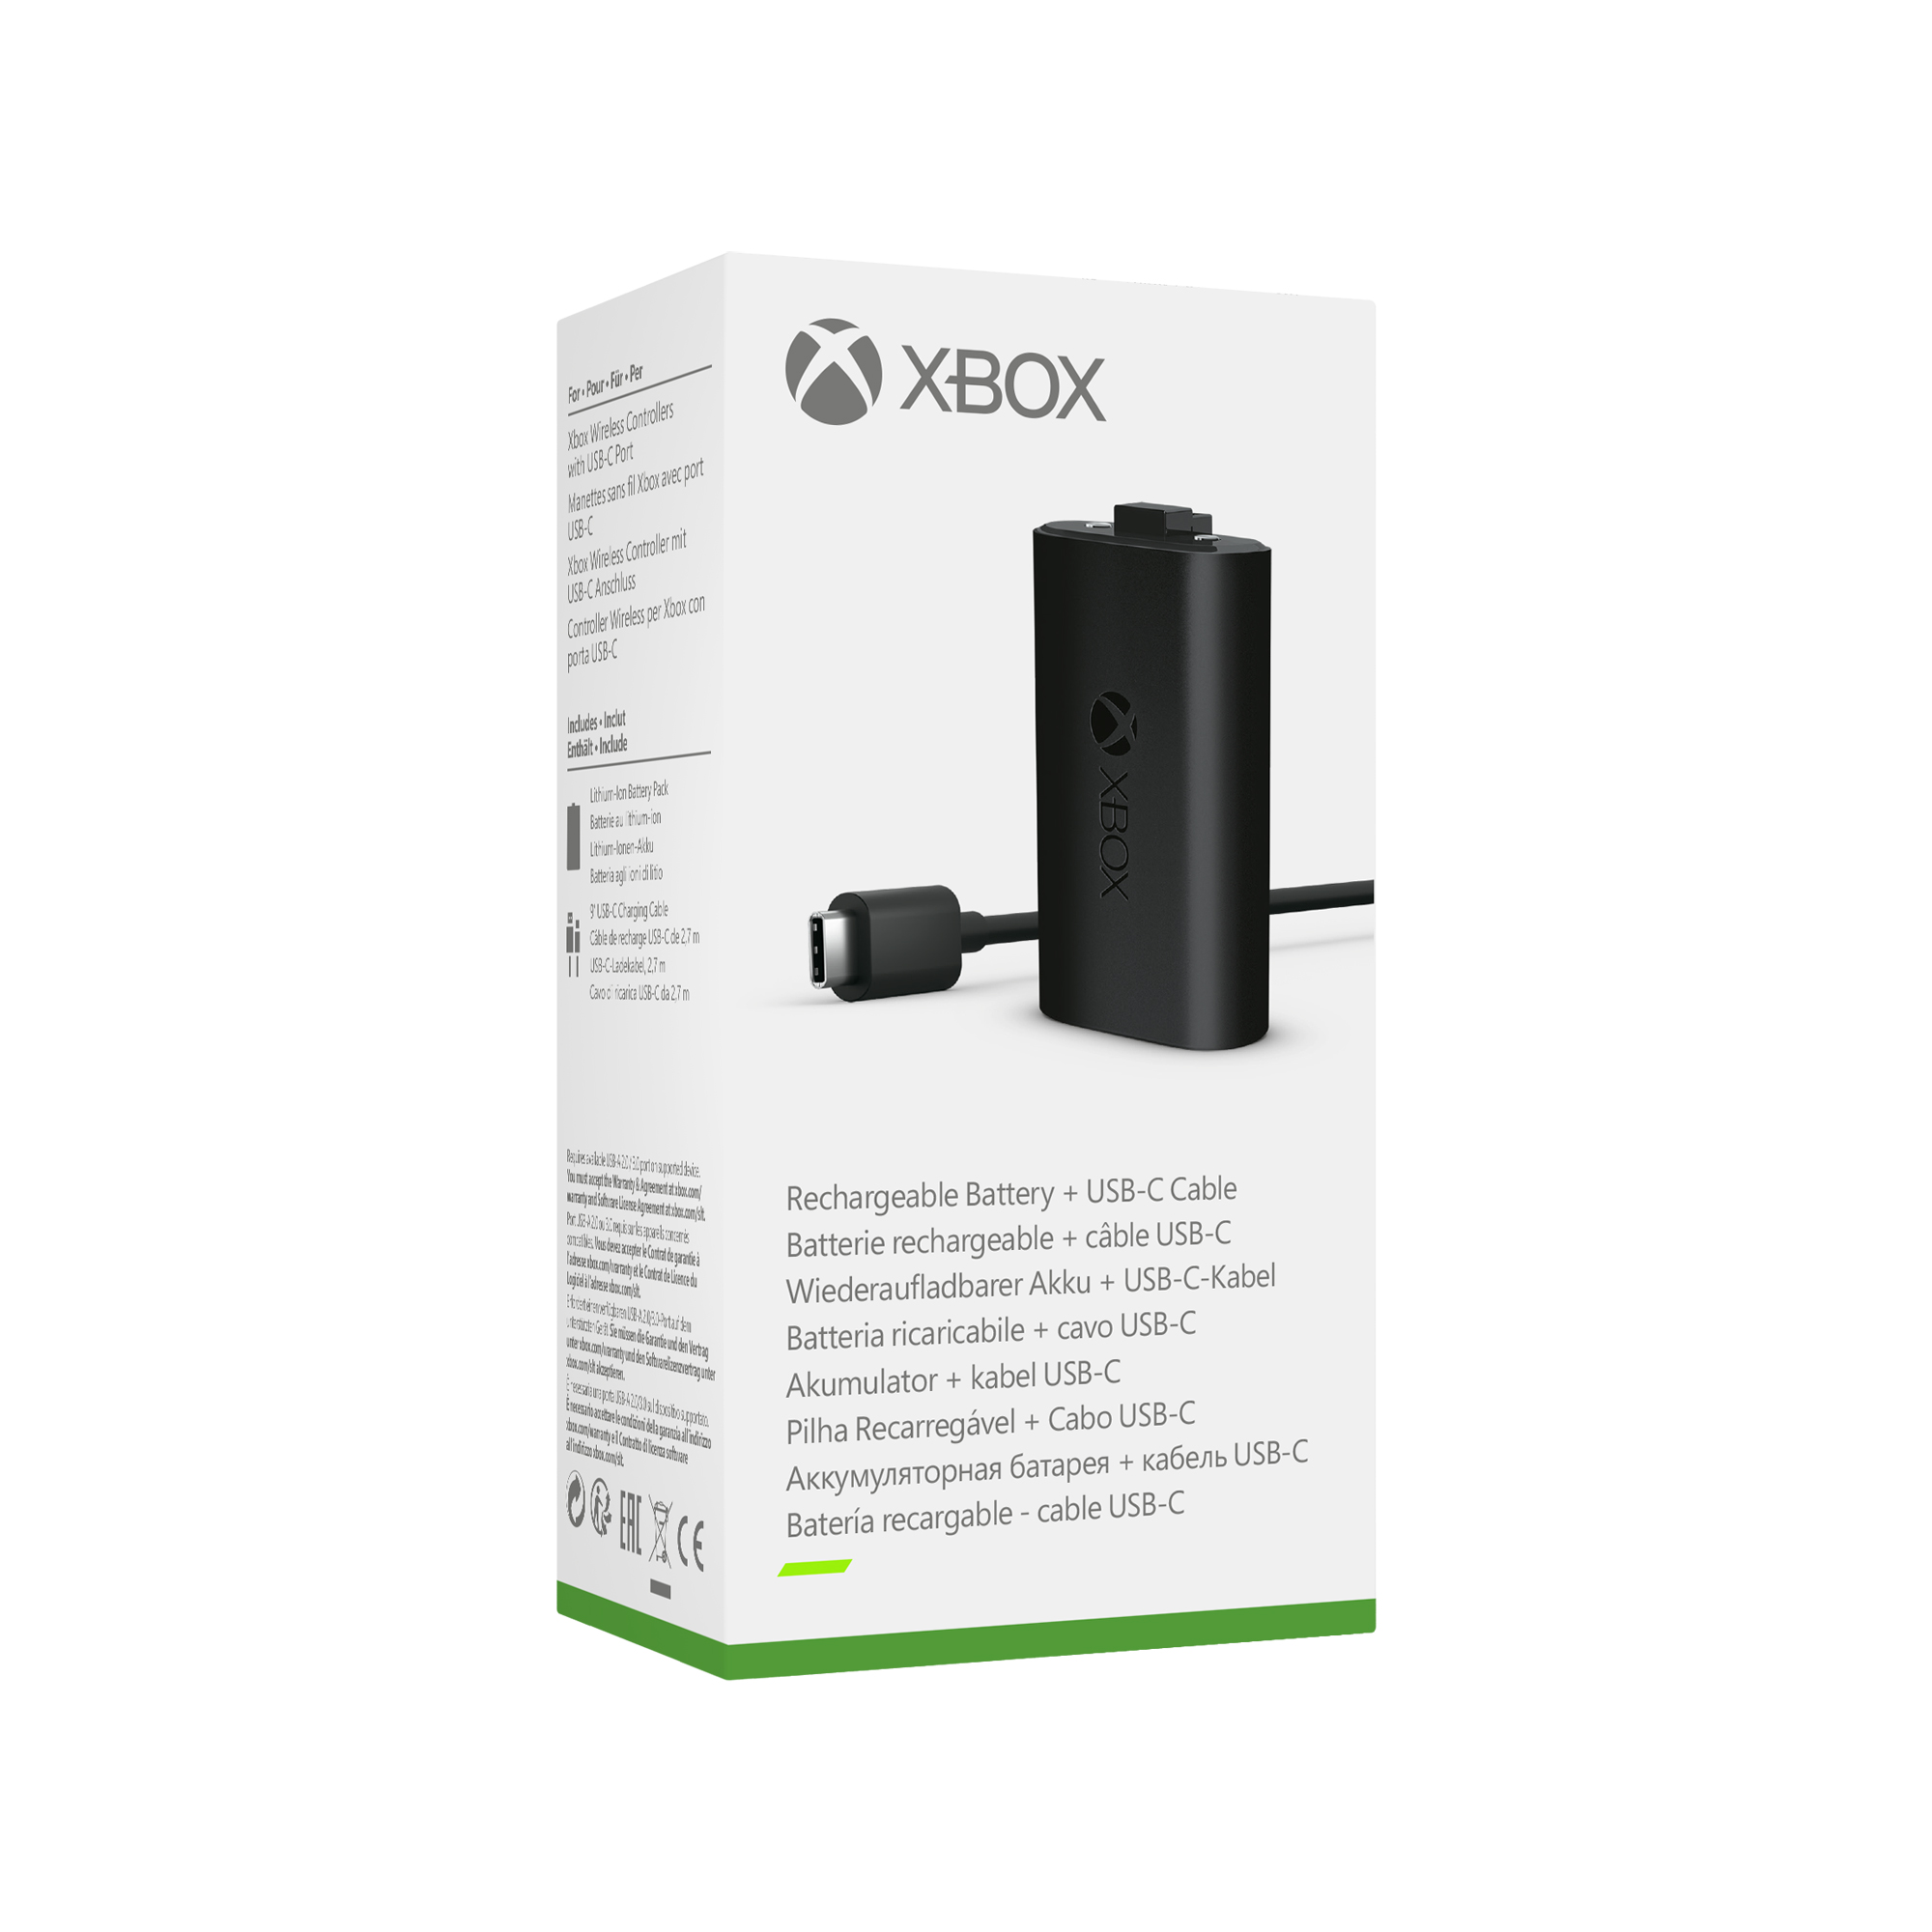 Заряжало 10 купить. Зарядный комплект Microsoft Play and charge Kit для Xbox one. Геймпад Xbox Series s аккумулятор. Аккумулятор с зарядкой для геймпада Xbox one. Аккумуляторная батарея Xbox и кабель USB-C.